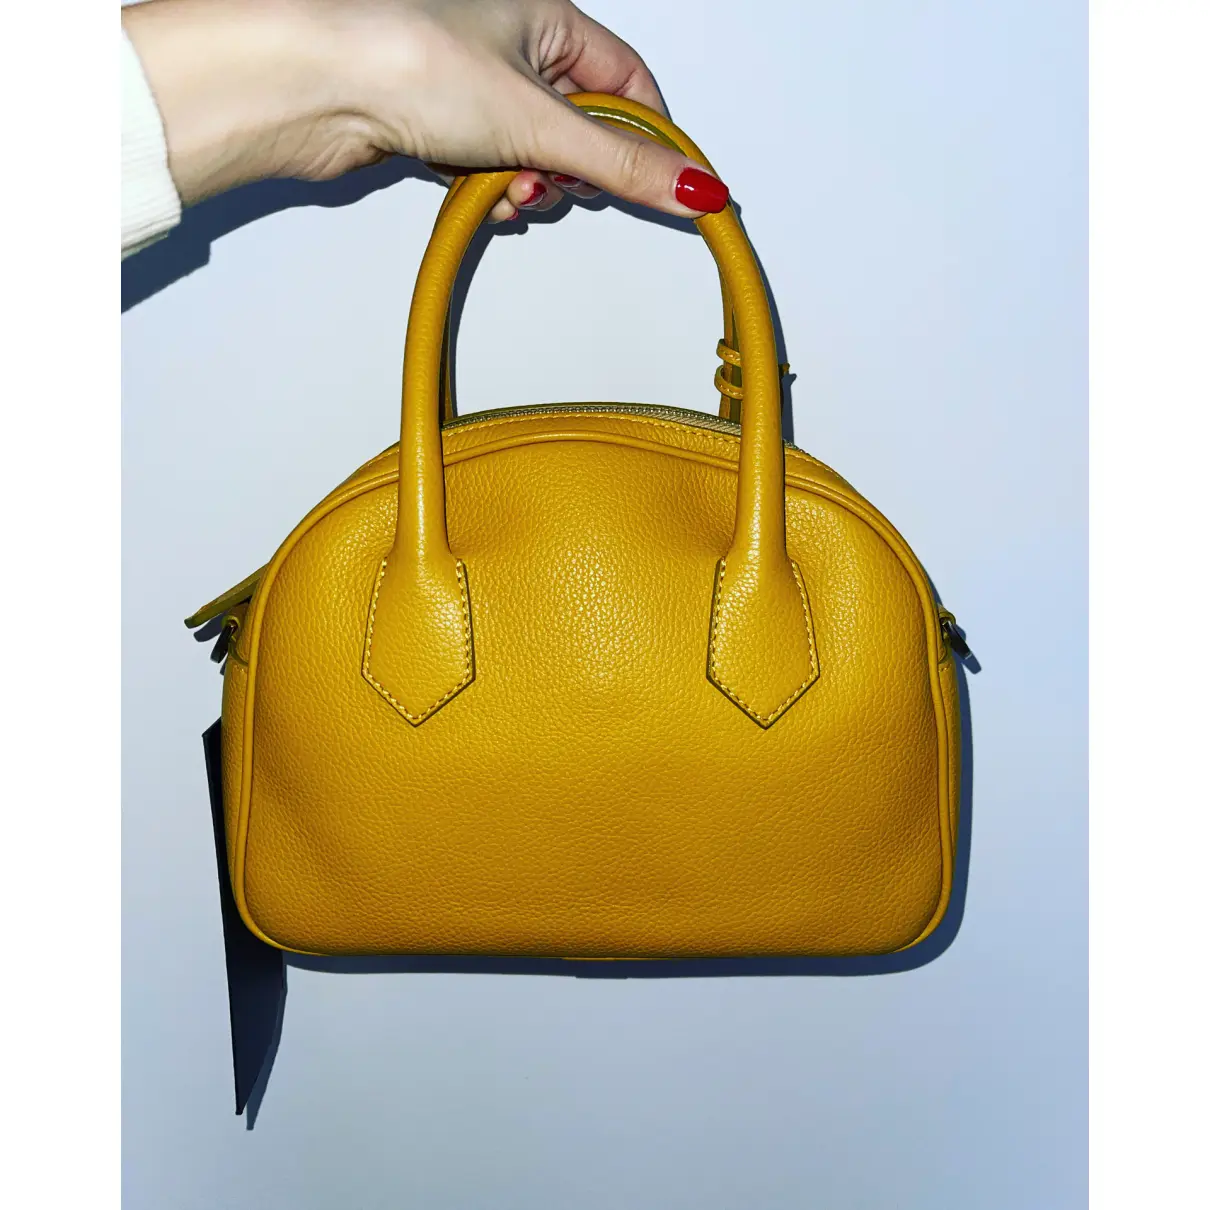 Buy The Kooples Irina leather handbag online